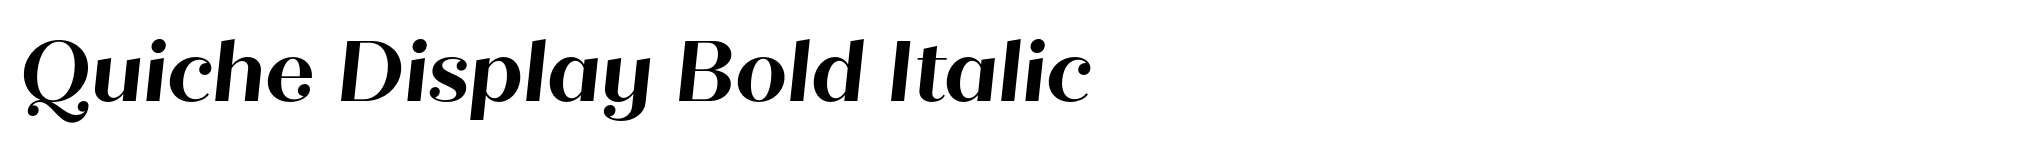 Quiche Display Bold Italic image